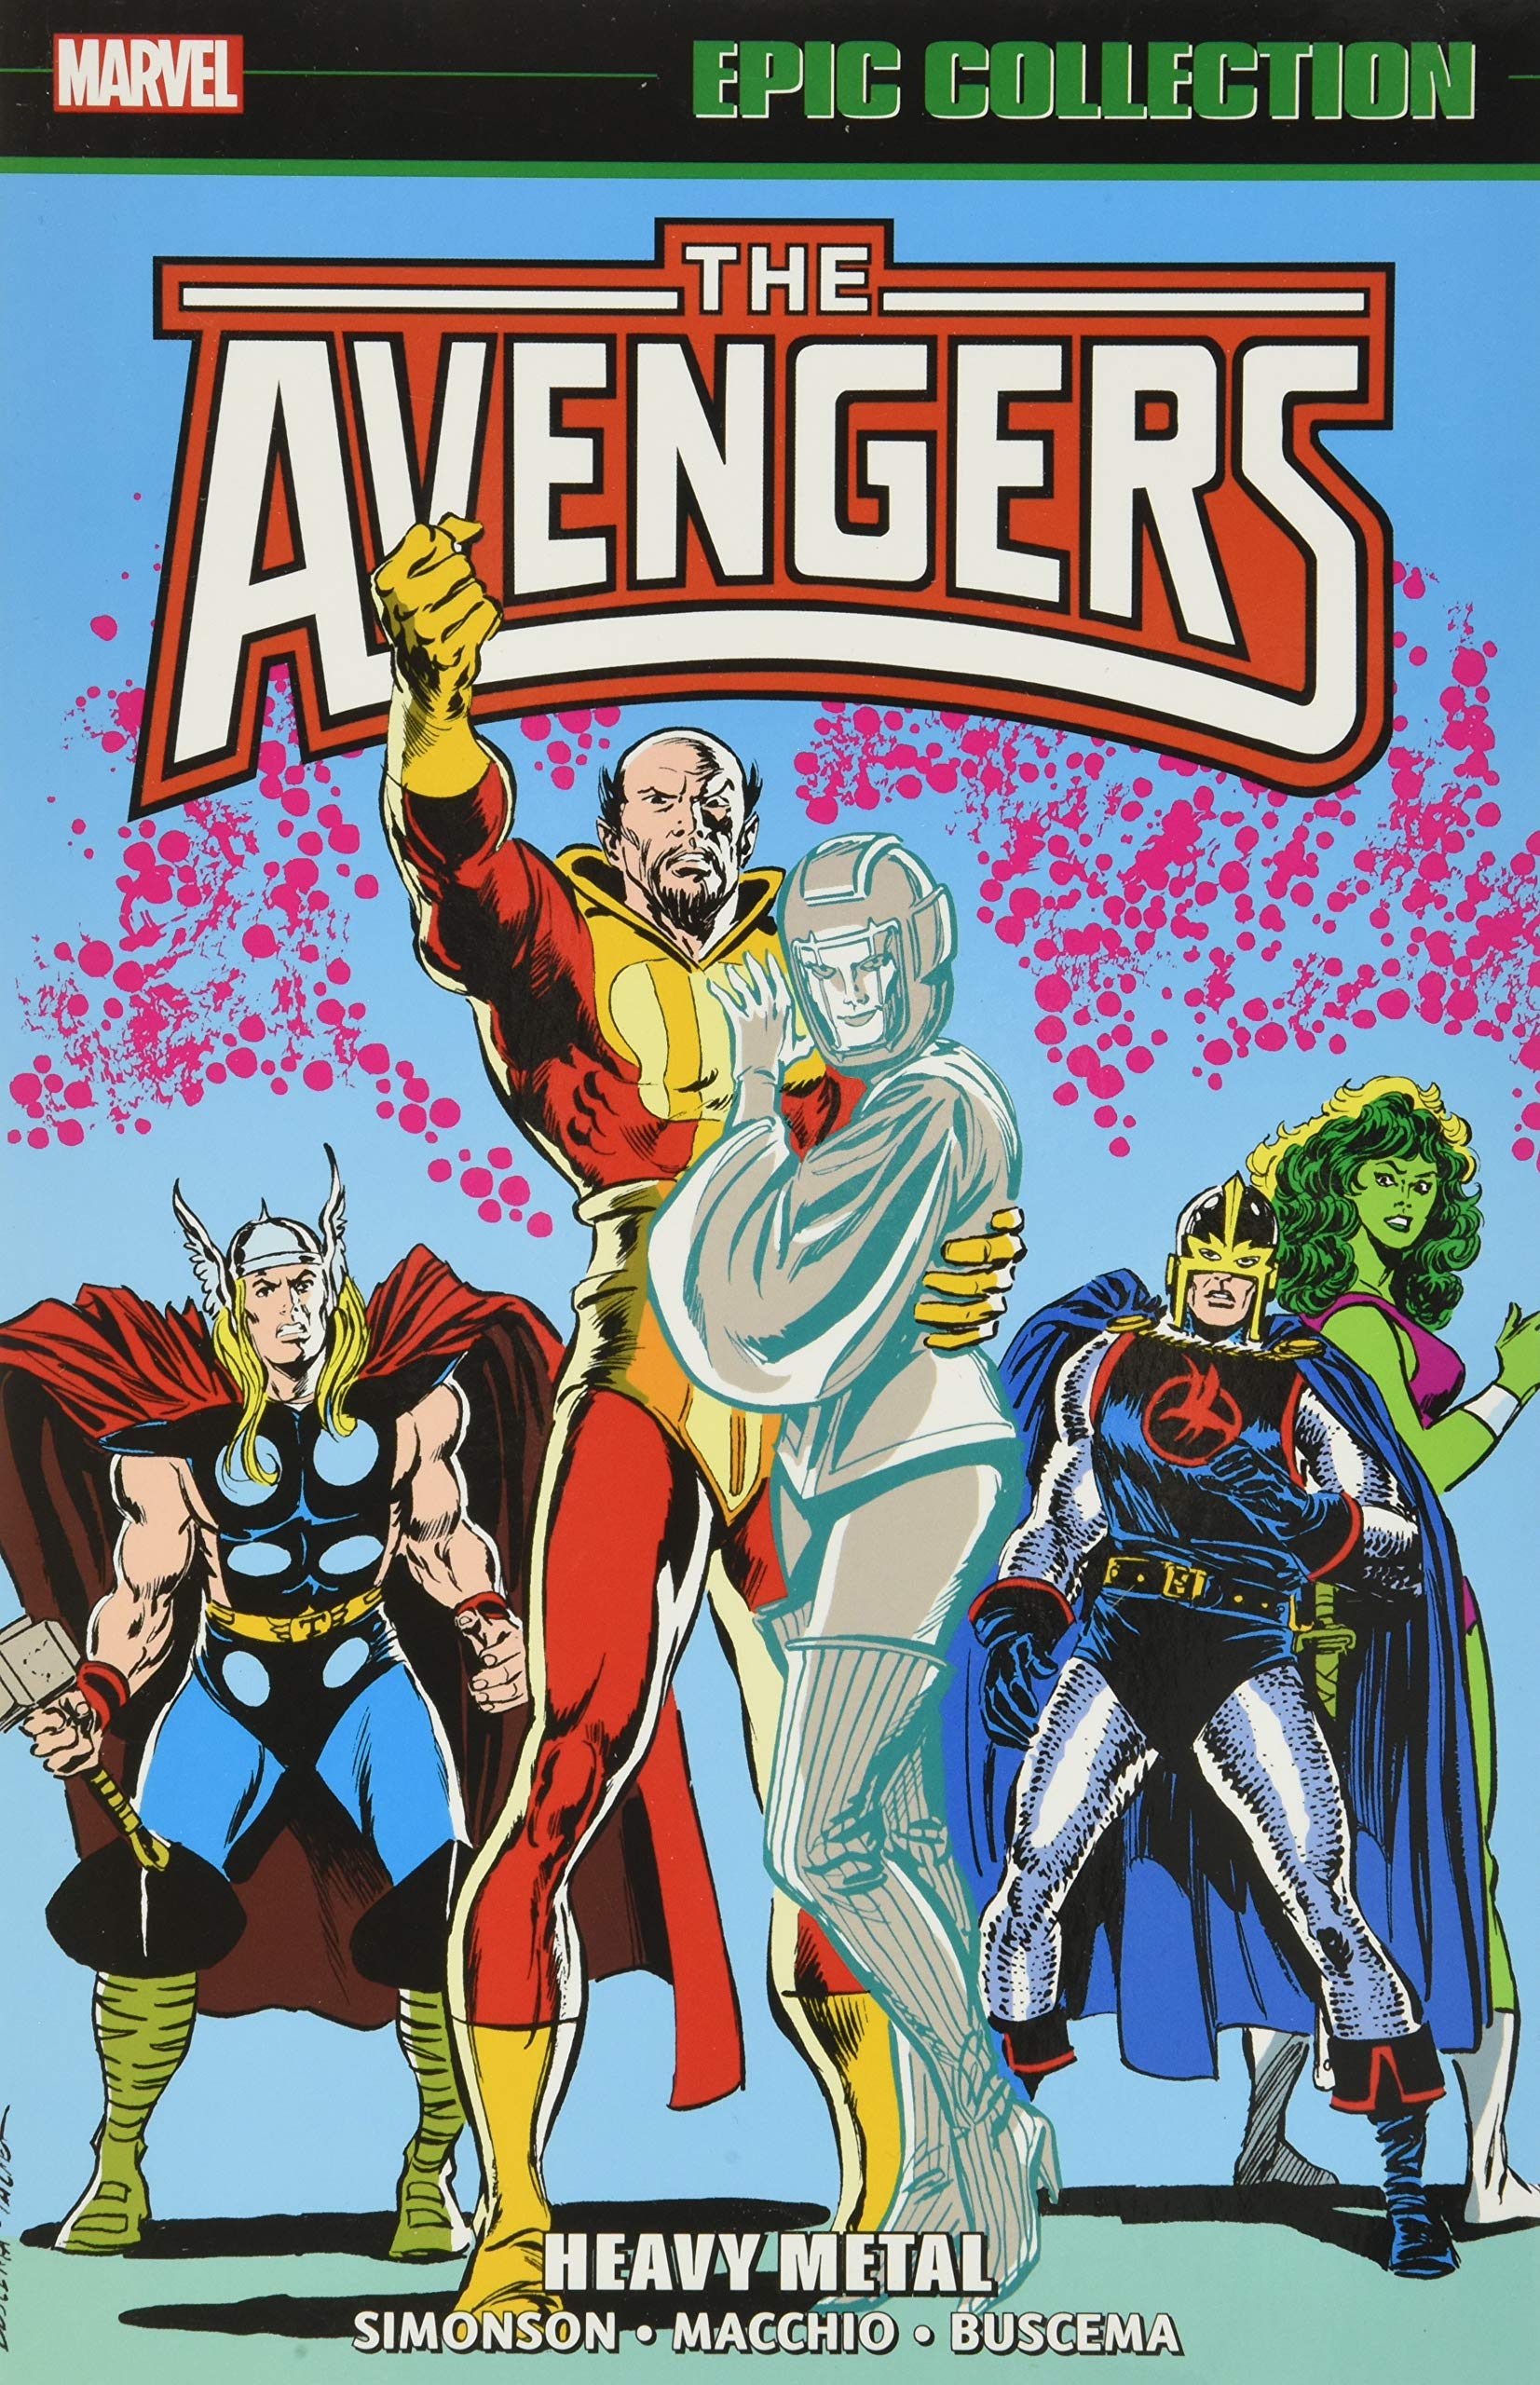 West Coast Avengers: Epic Collection vol 18 - Heavy Metal s/c